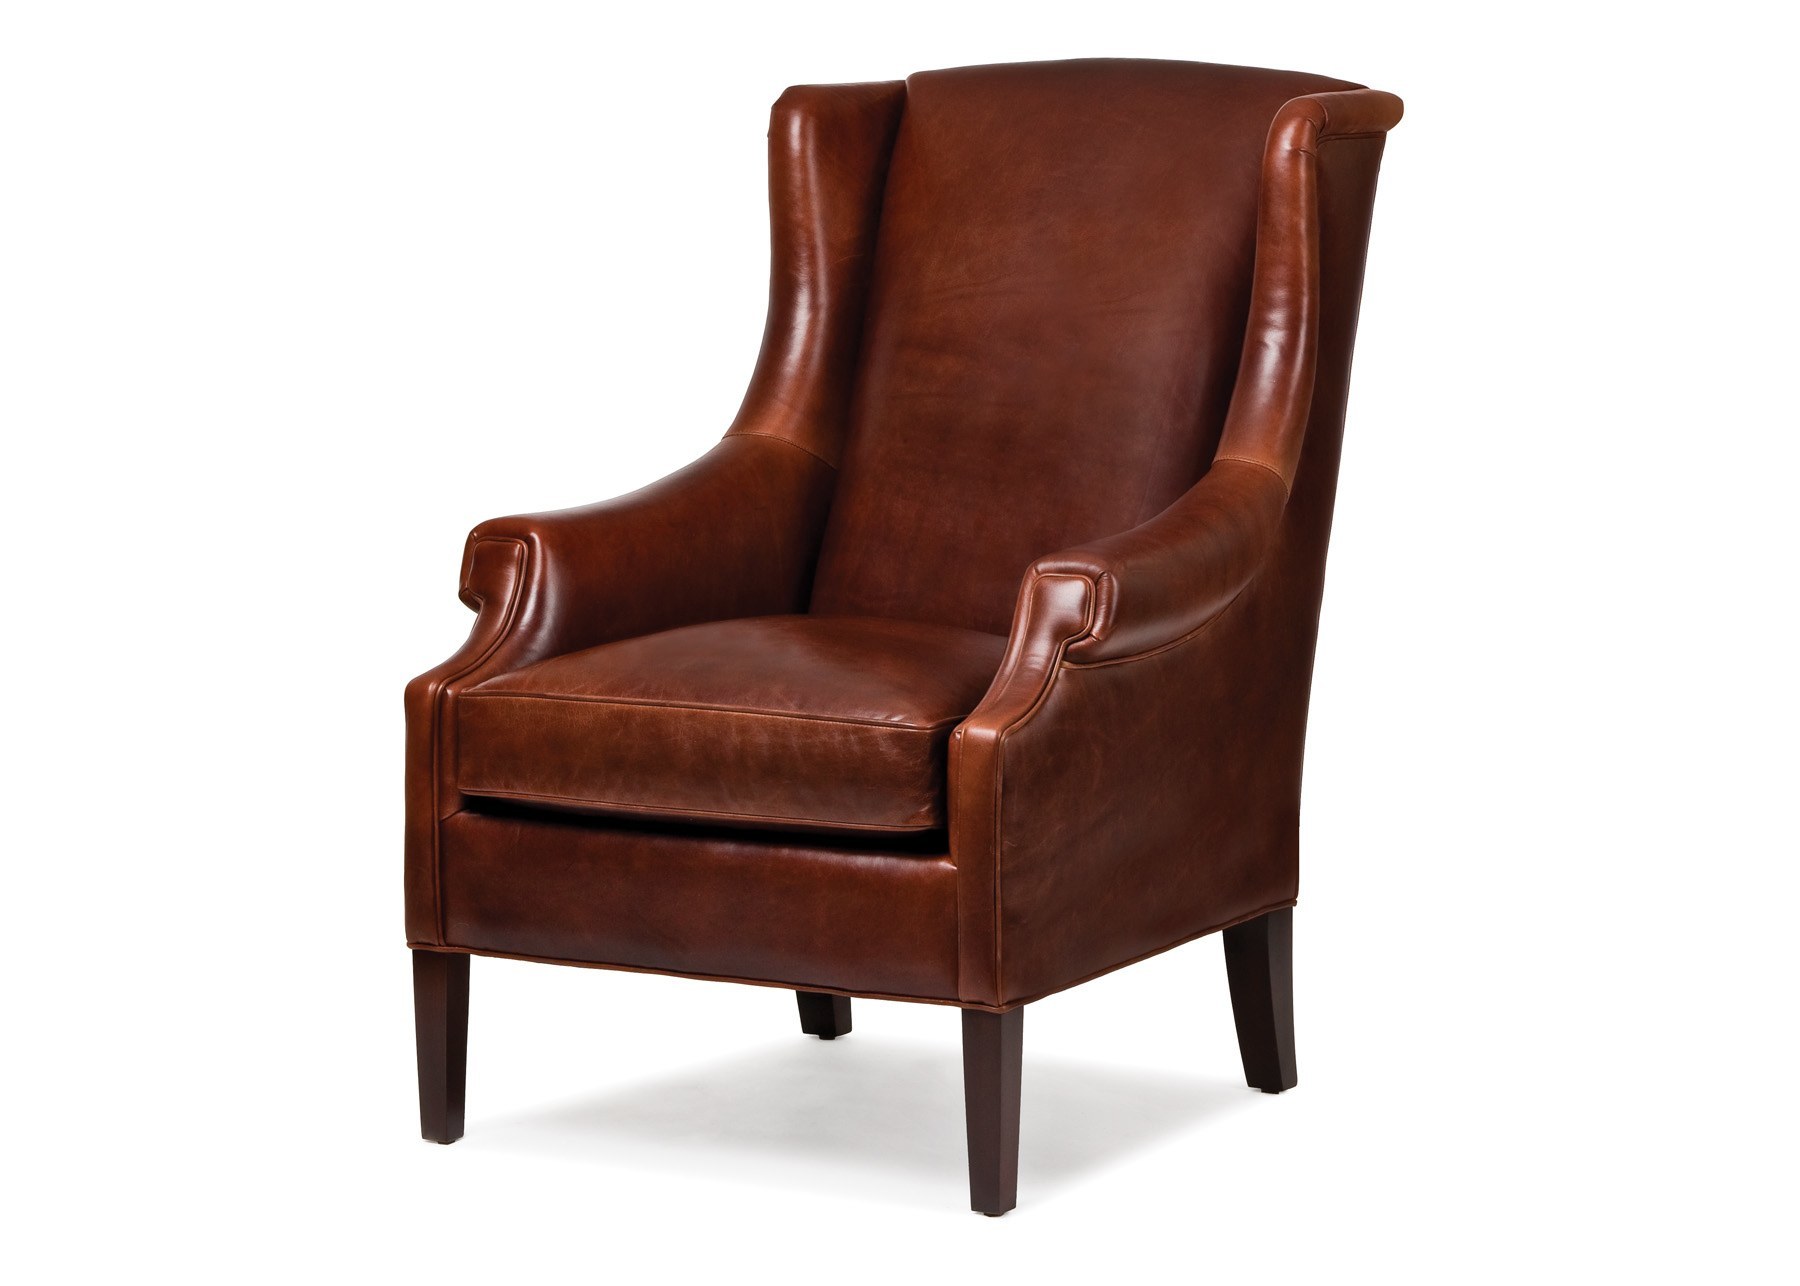 Cabot Wrenn Legends Greyson Lounge Chair